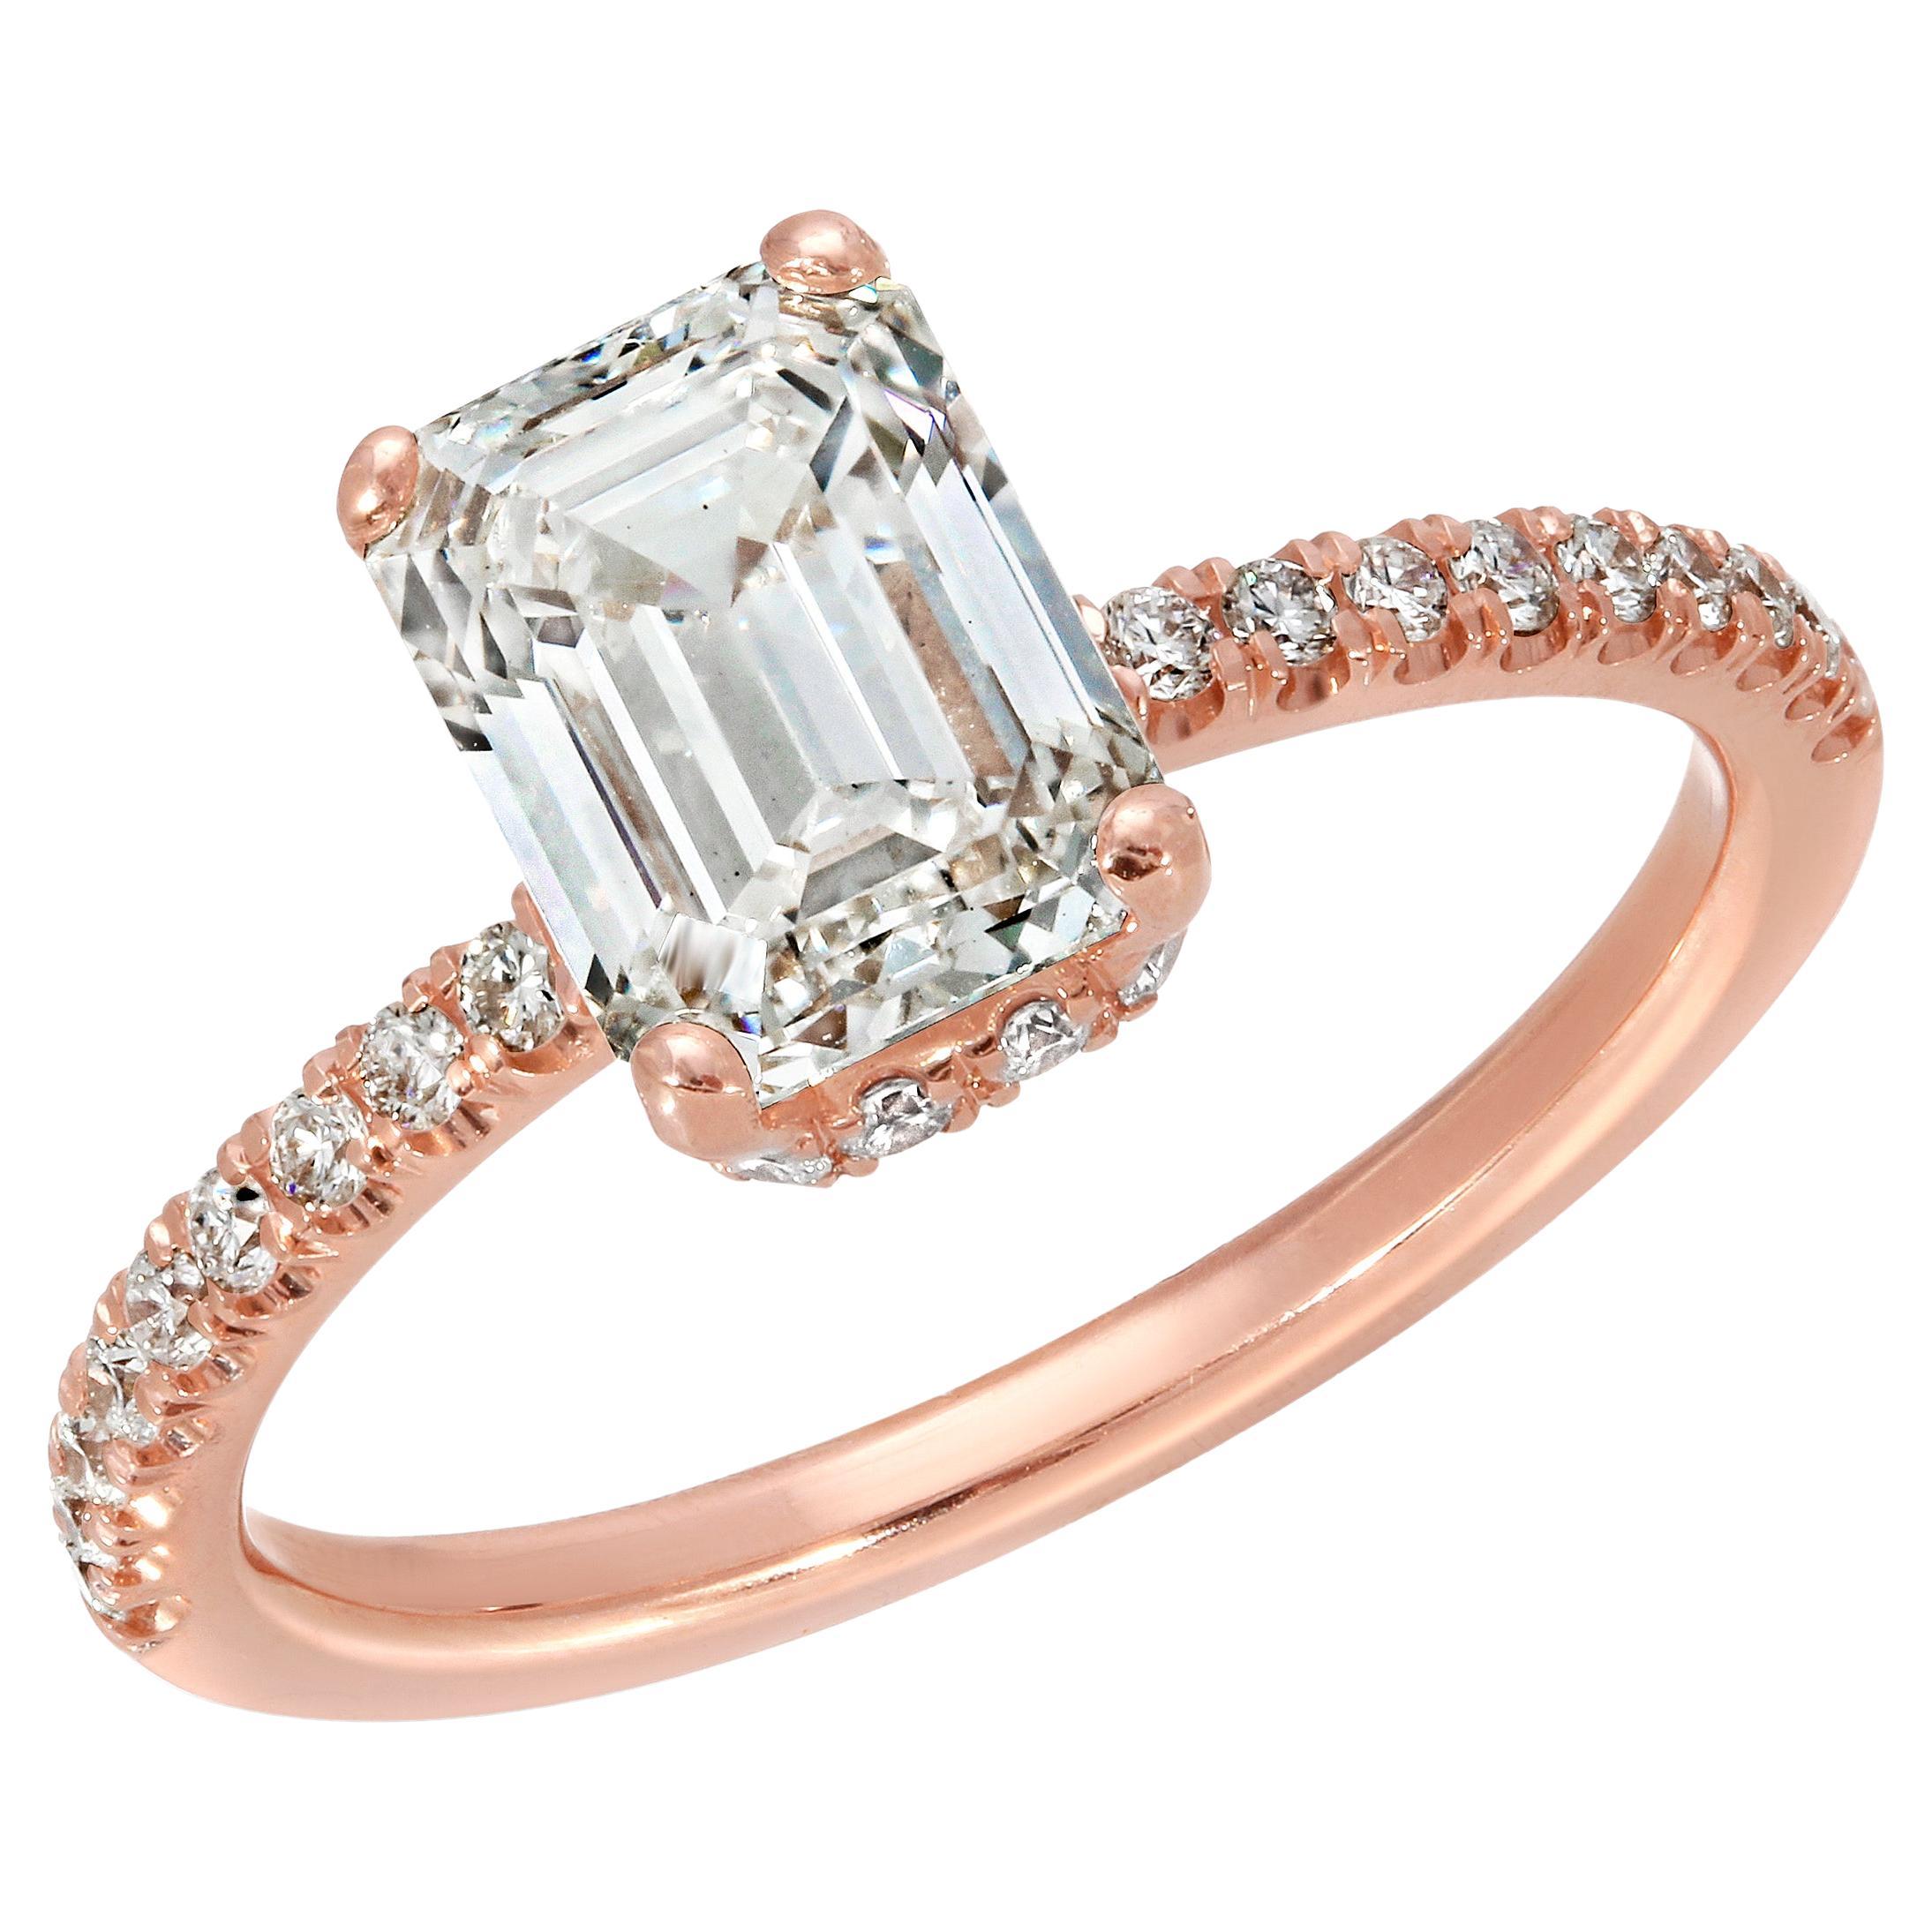 2.01 Carat Emerald Cut Diamond Set in a 14k Rose Gold Halo & Hidden Halo Ring For Sale